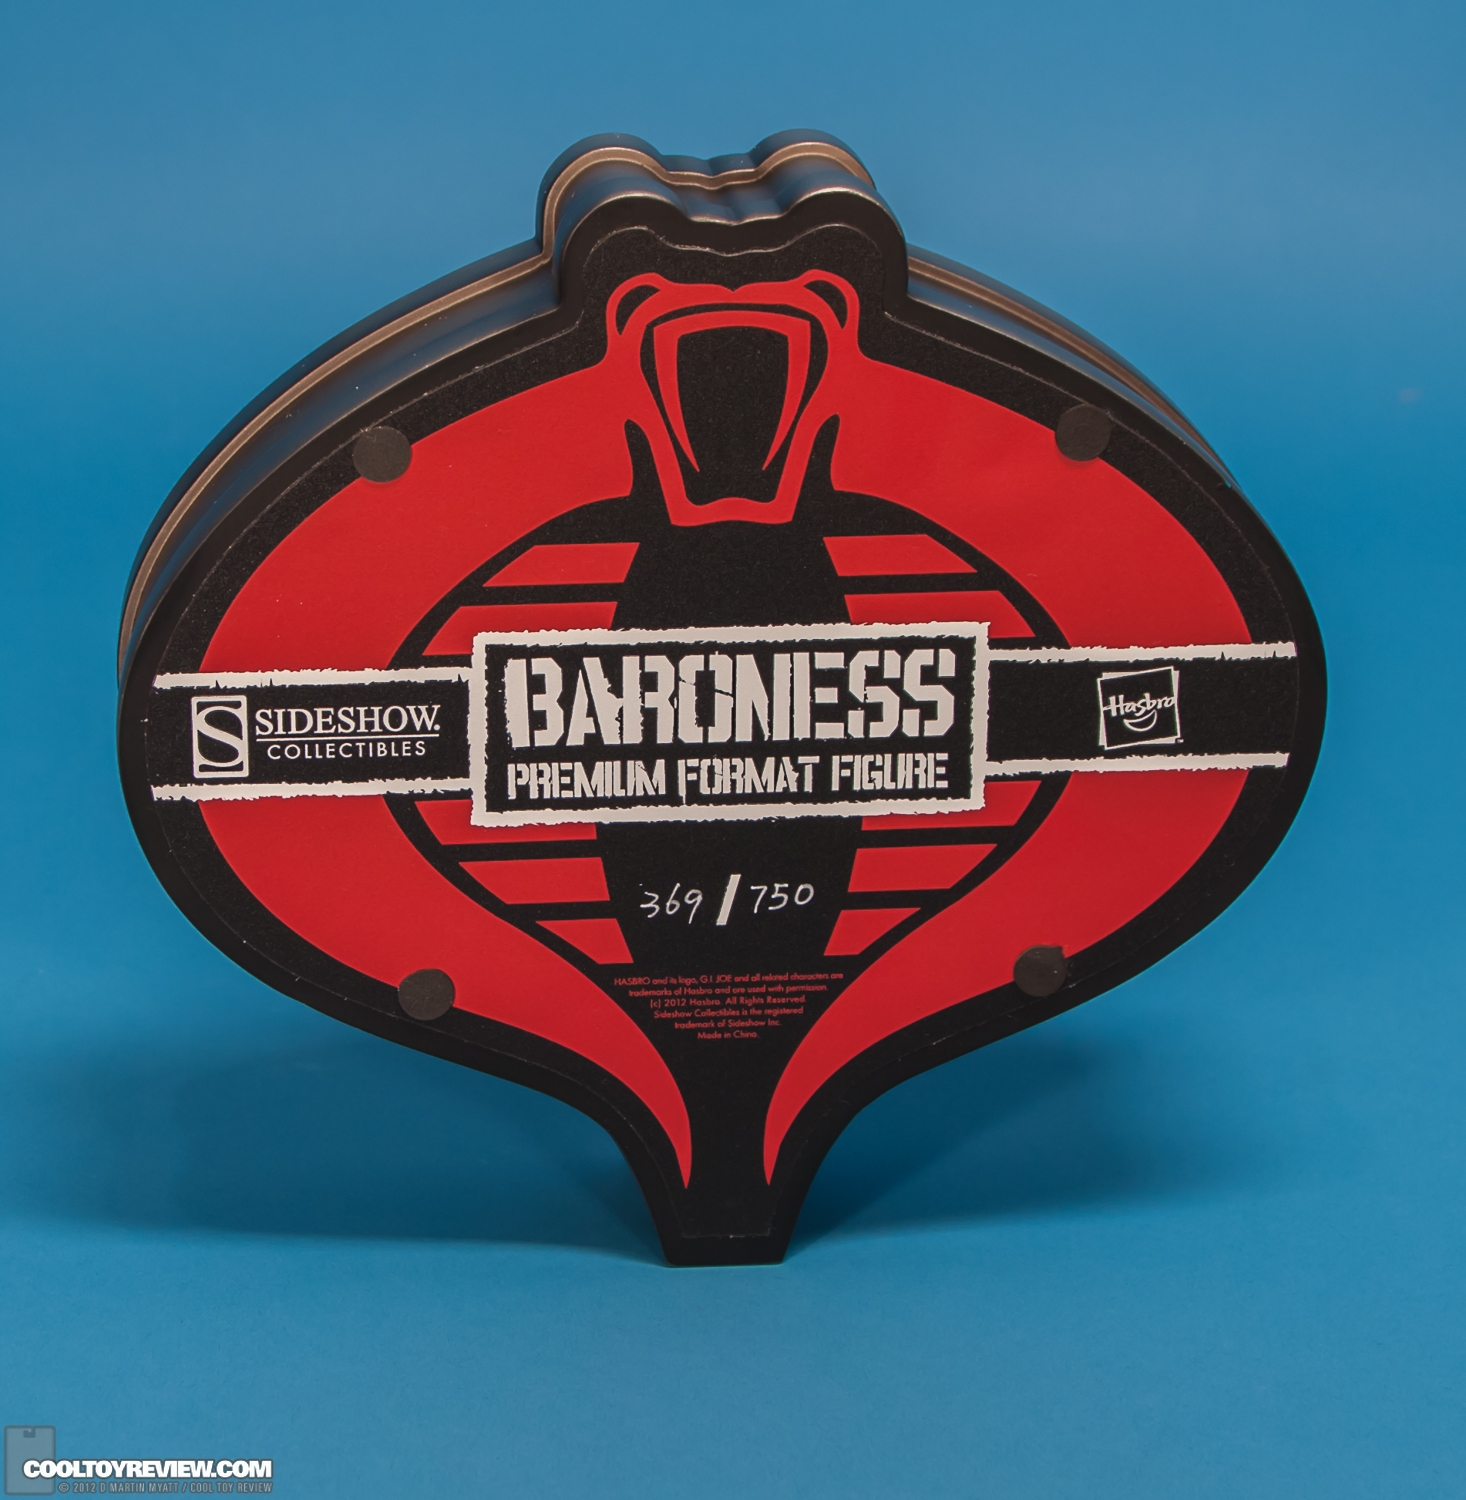 Baroness_Premium_Format_Figure_Cobra_GI_Joe_Sideshow_Collectibles-15.jpg